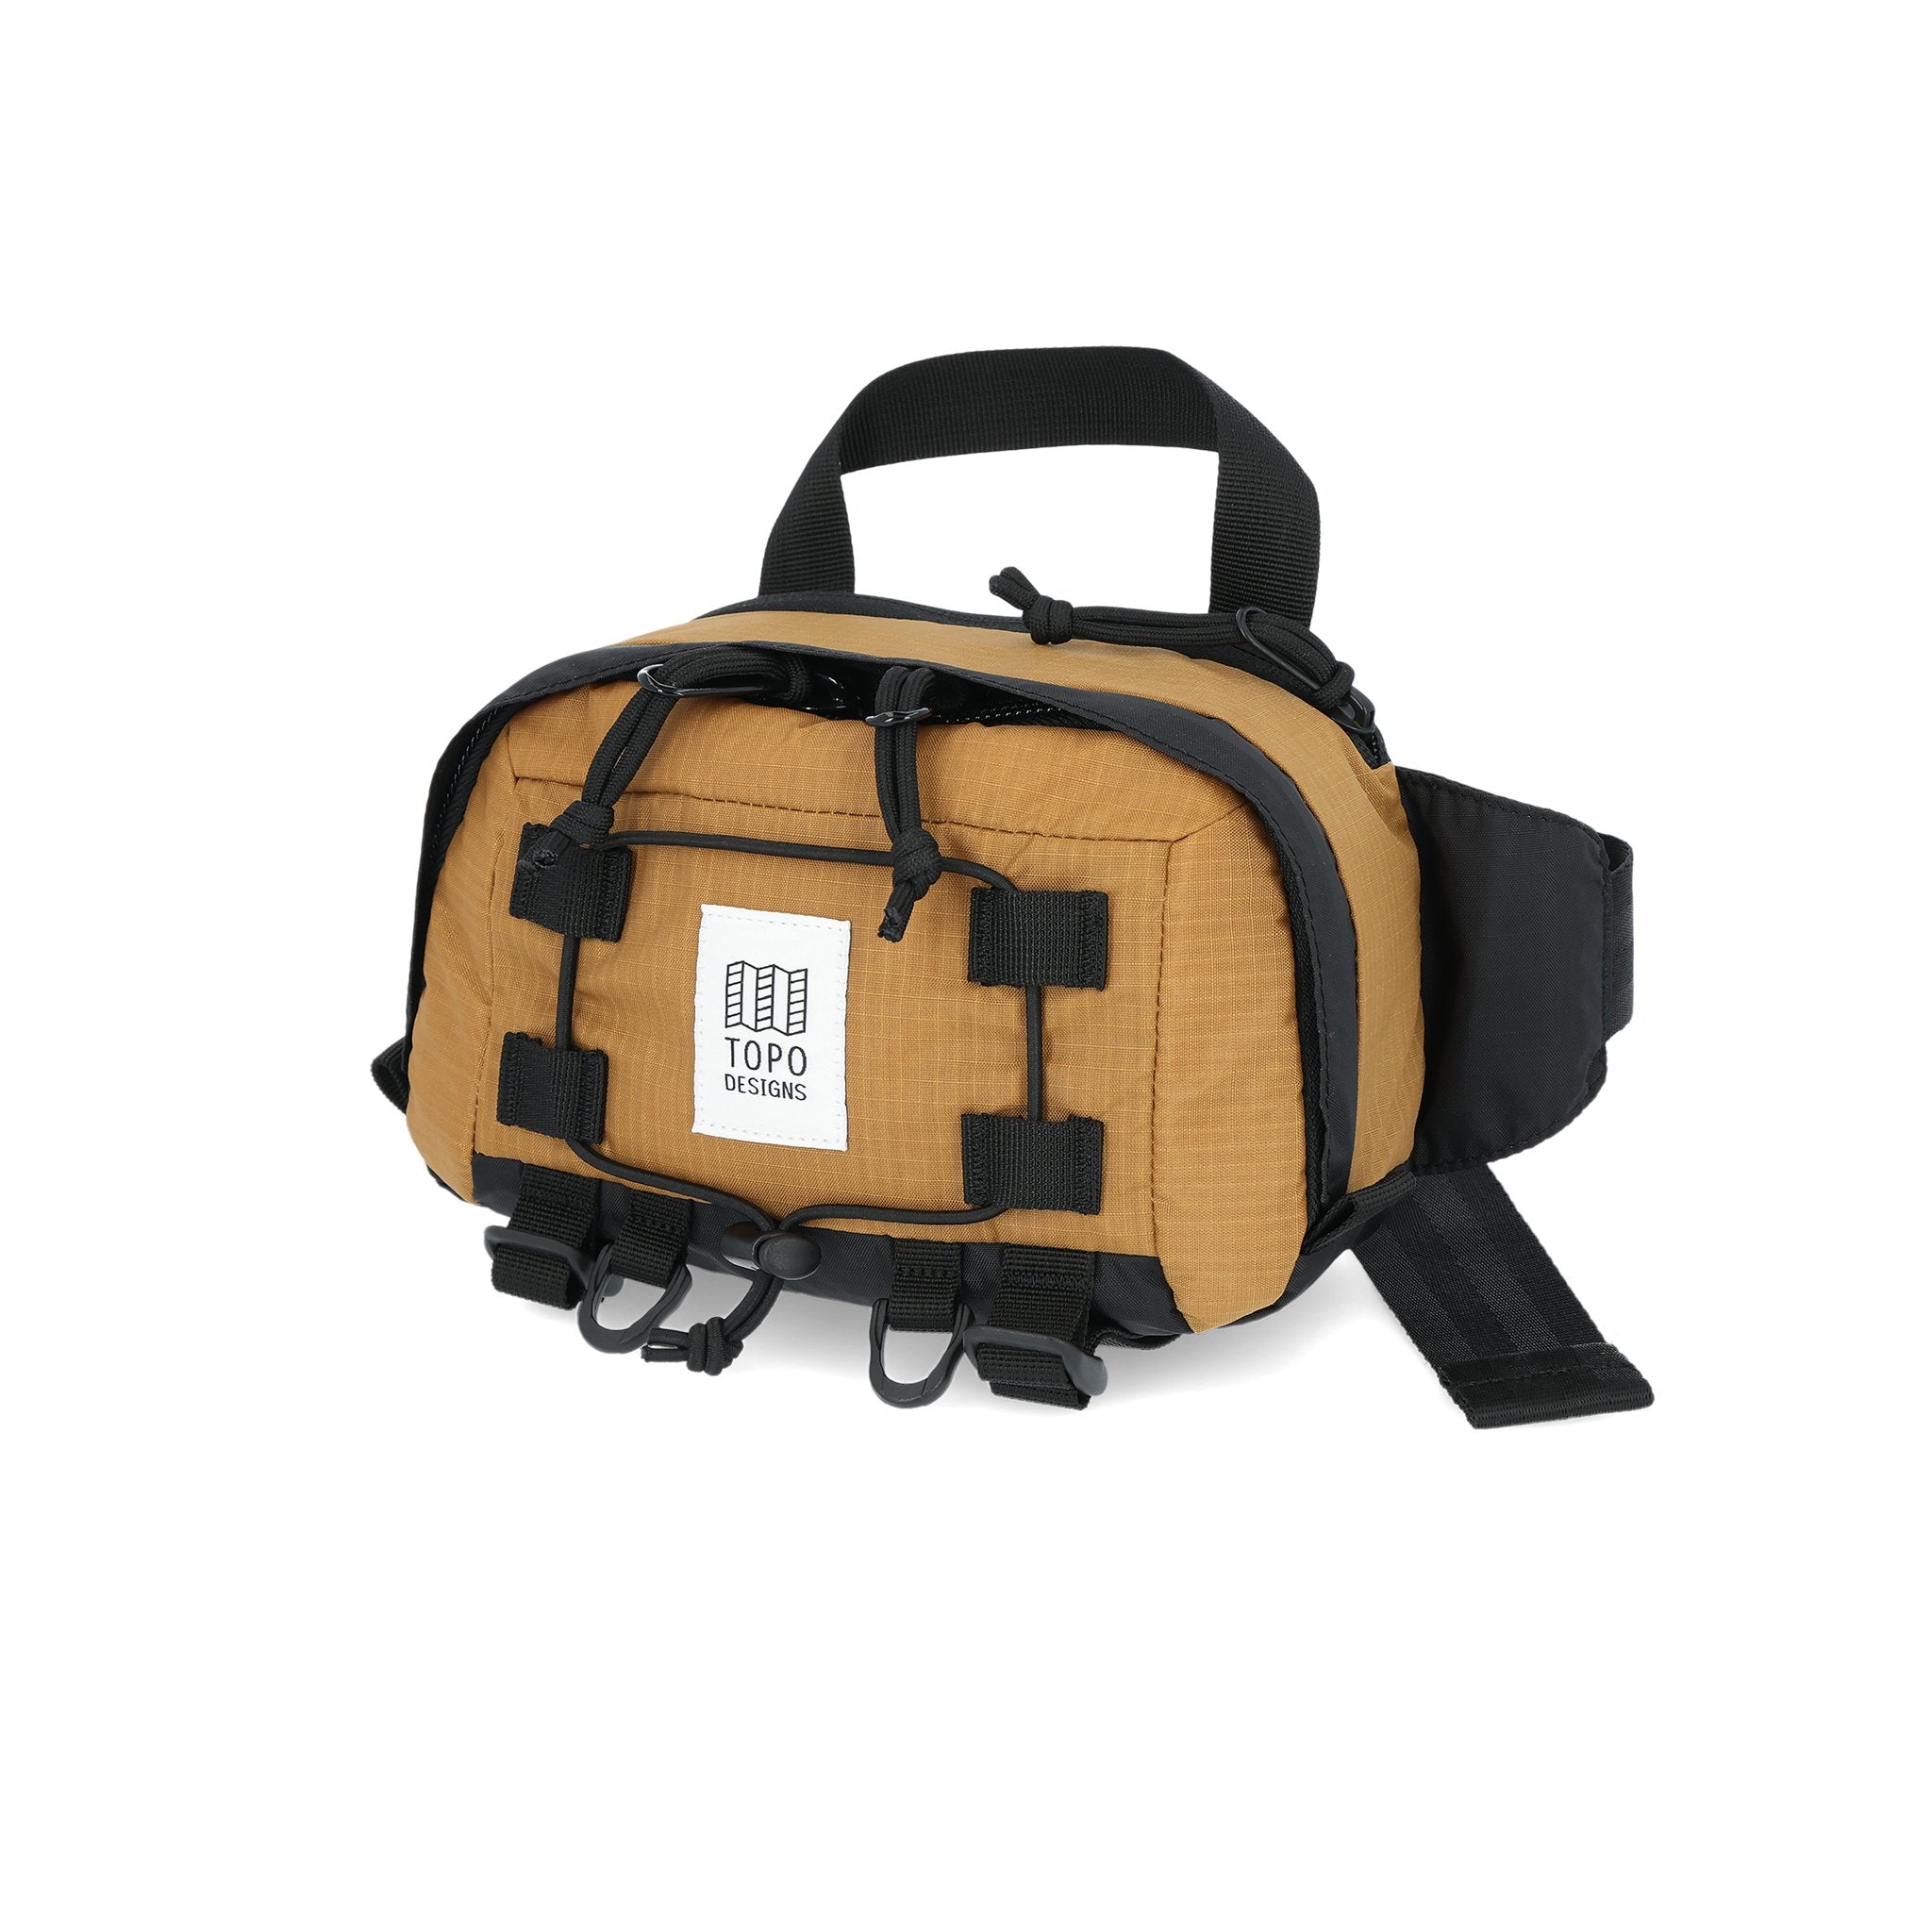 Topo Designs Mountain Hip Pack lumbar bum bag in Khaki brown.